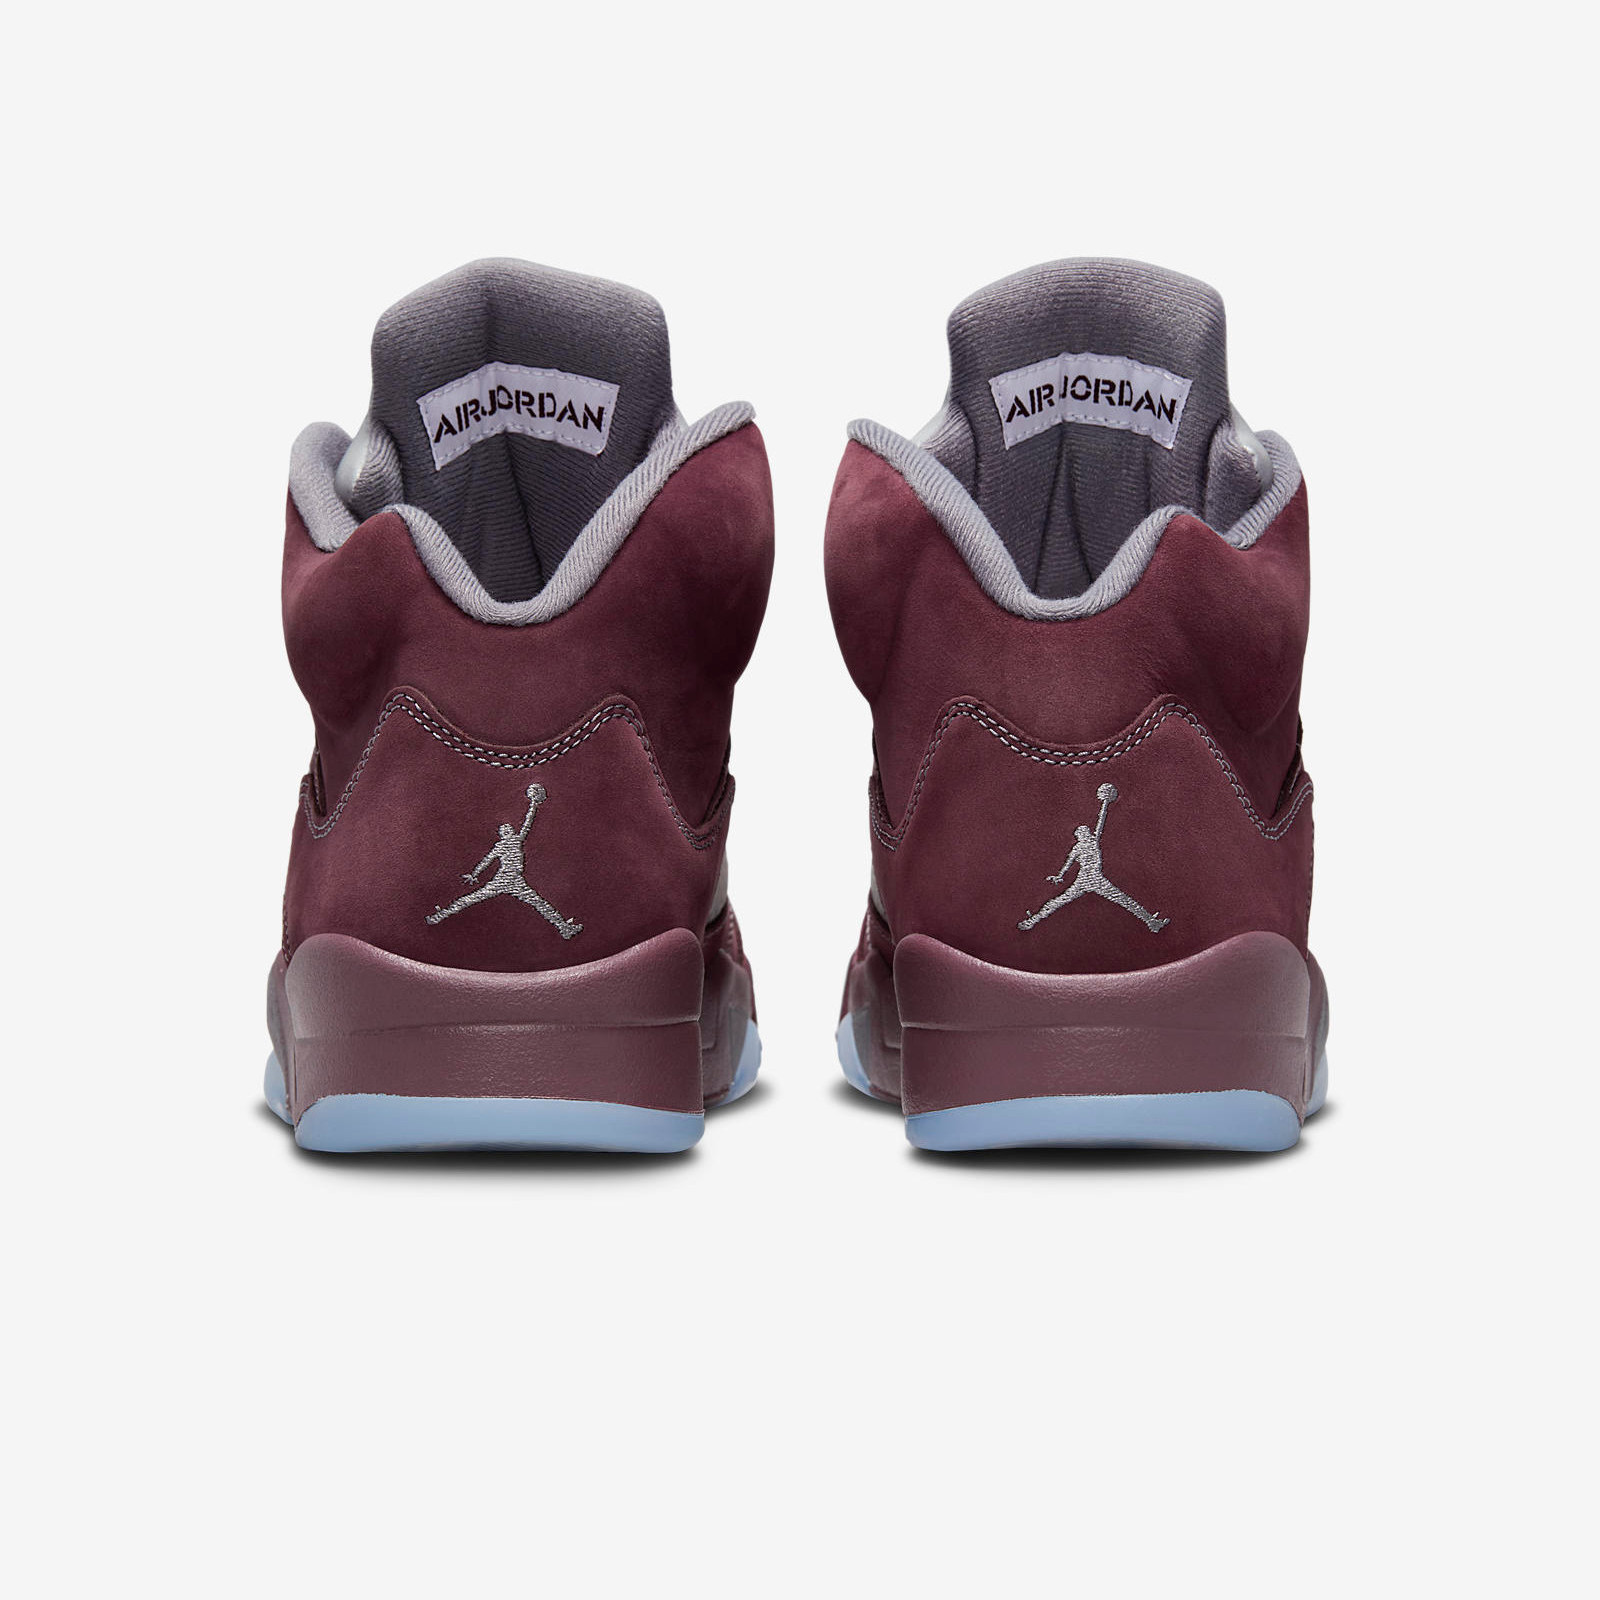 Air Jordan 5
« Burgundy »